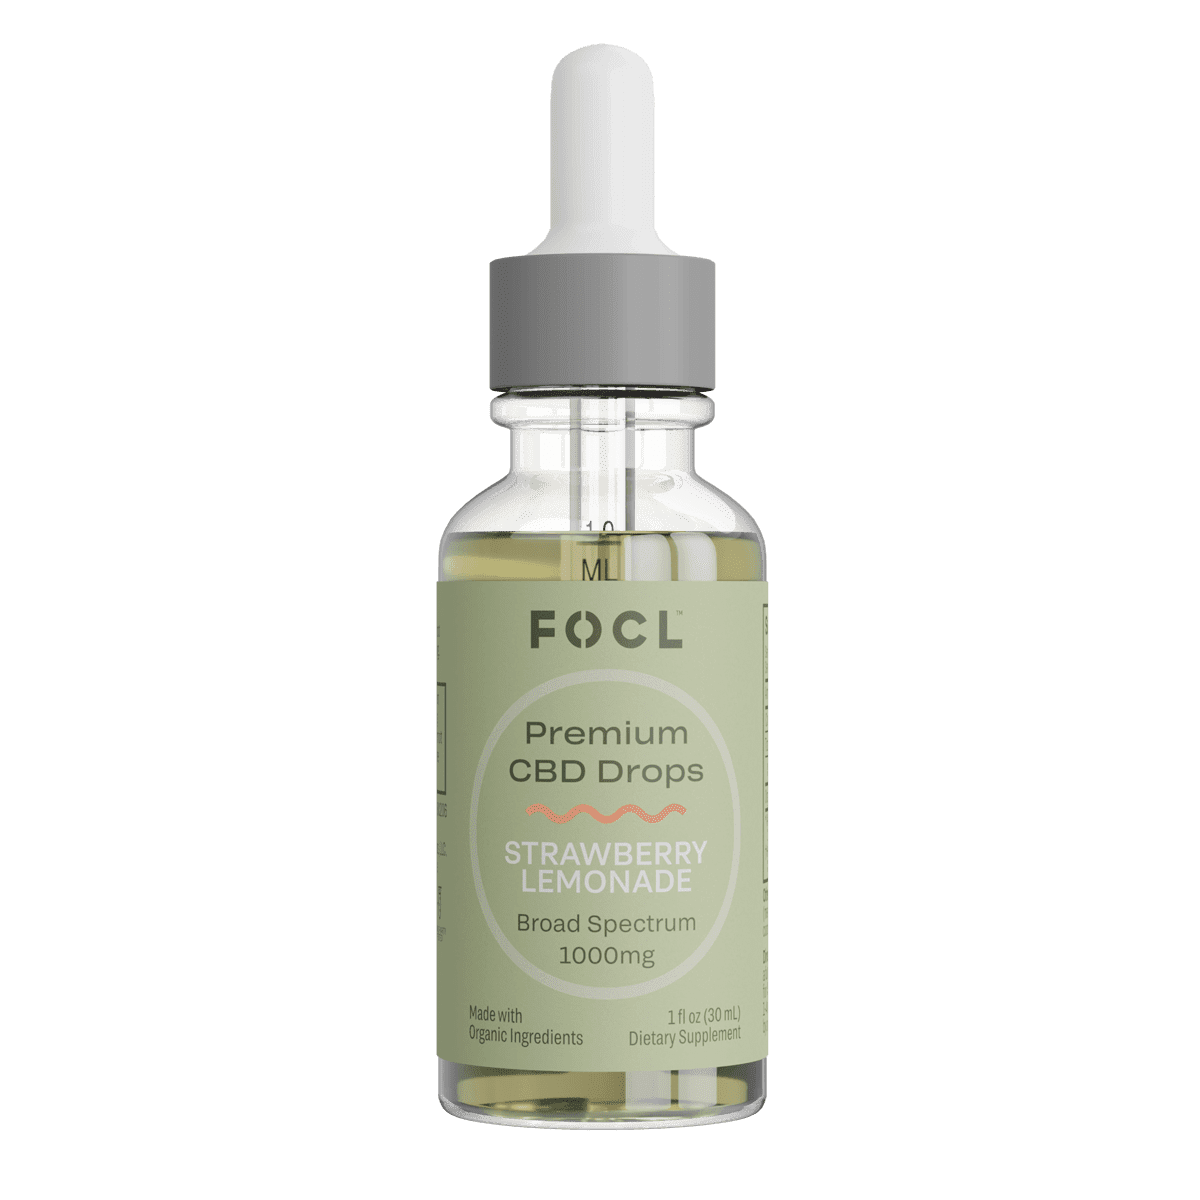 Focl CBD Drops - 1000mg (Strawberry Lemonade) image1